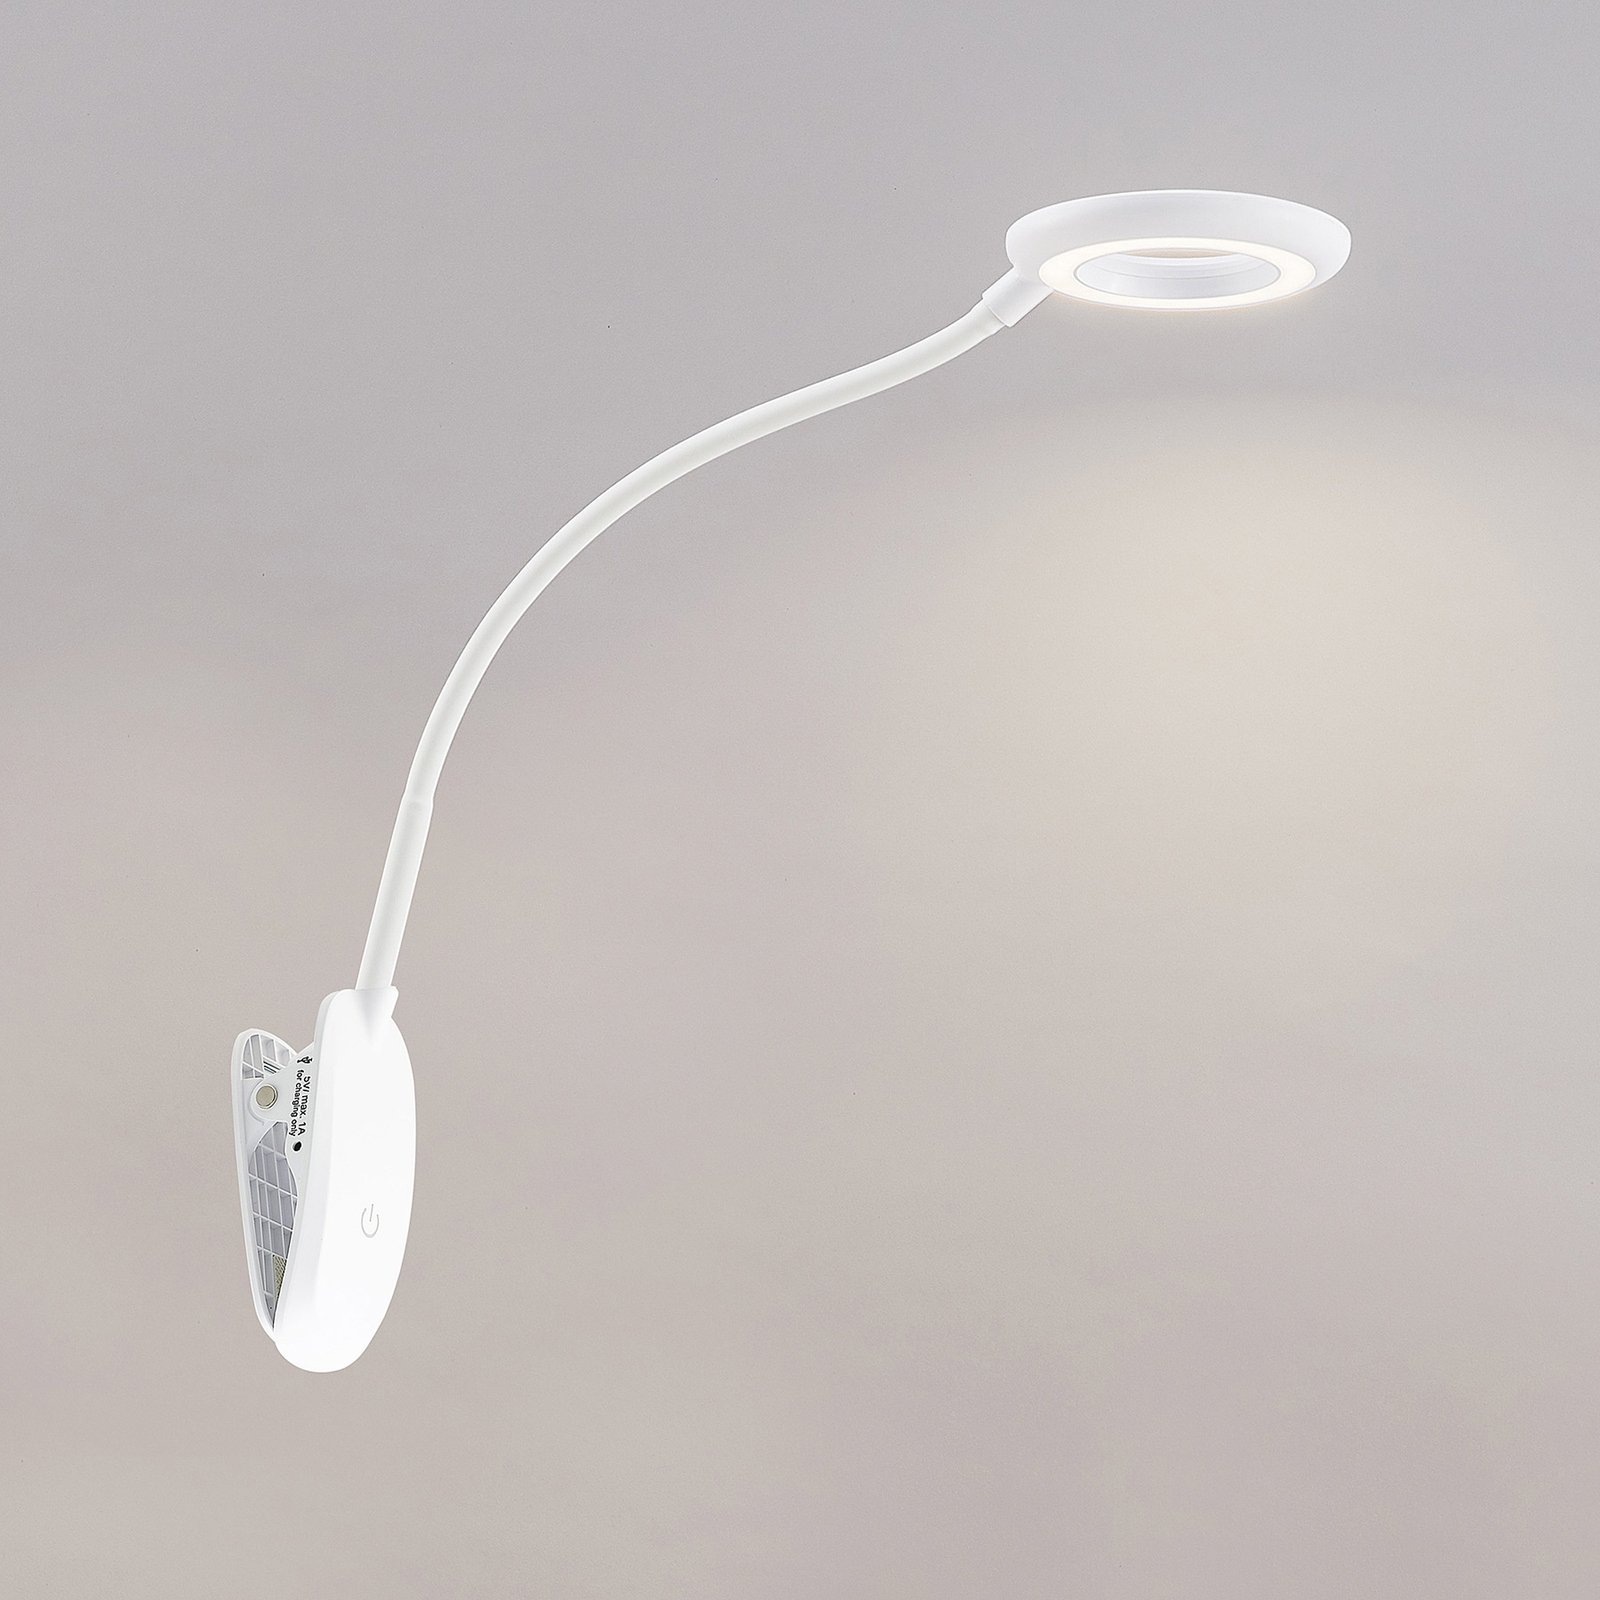 Prios Harumi lampe à pince LED, blanche